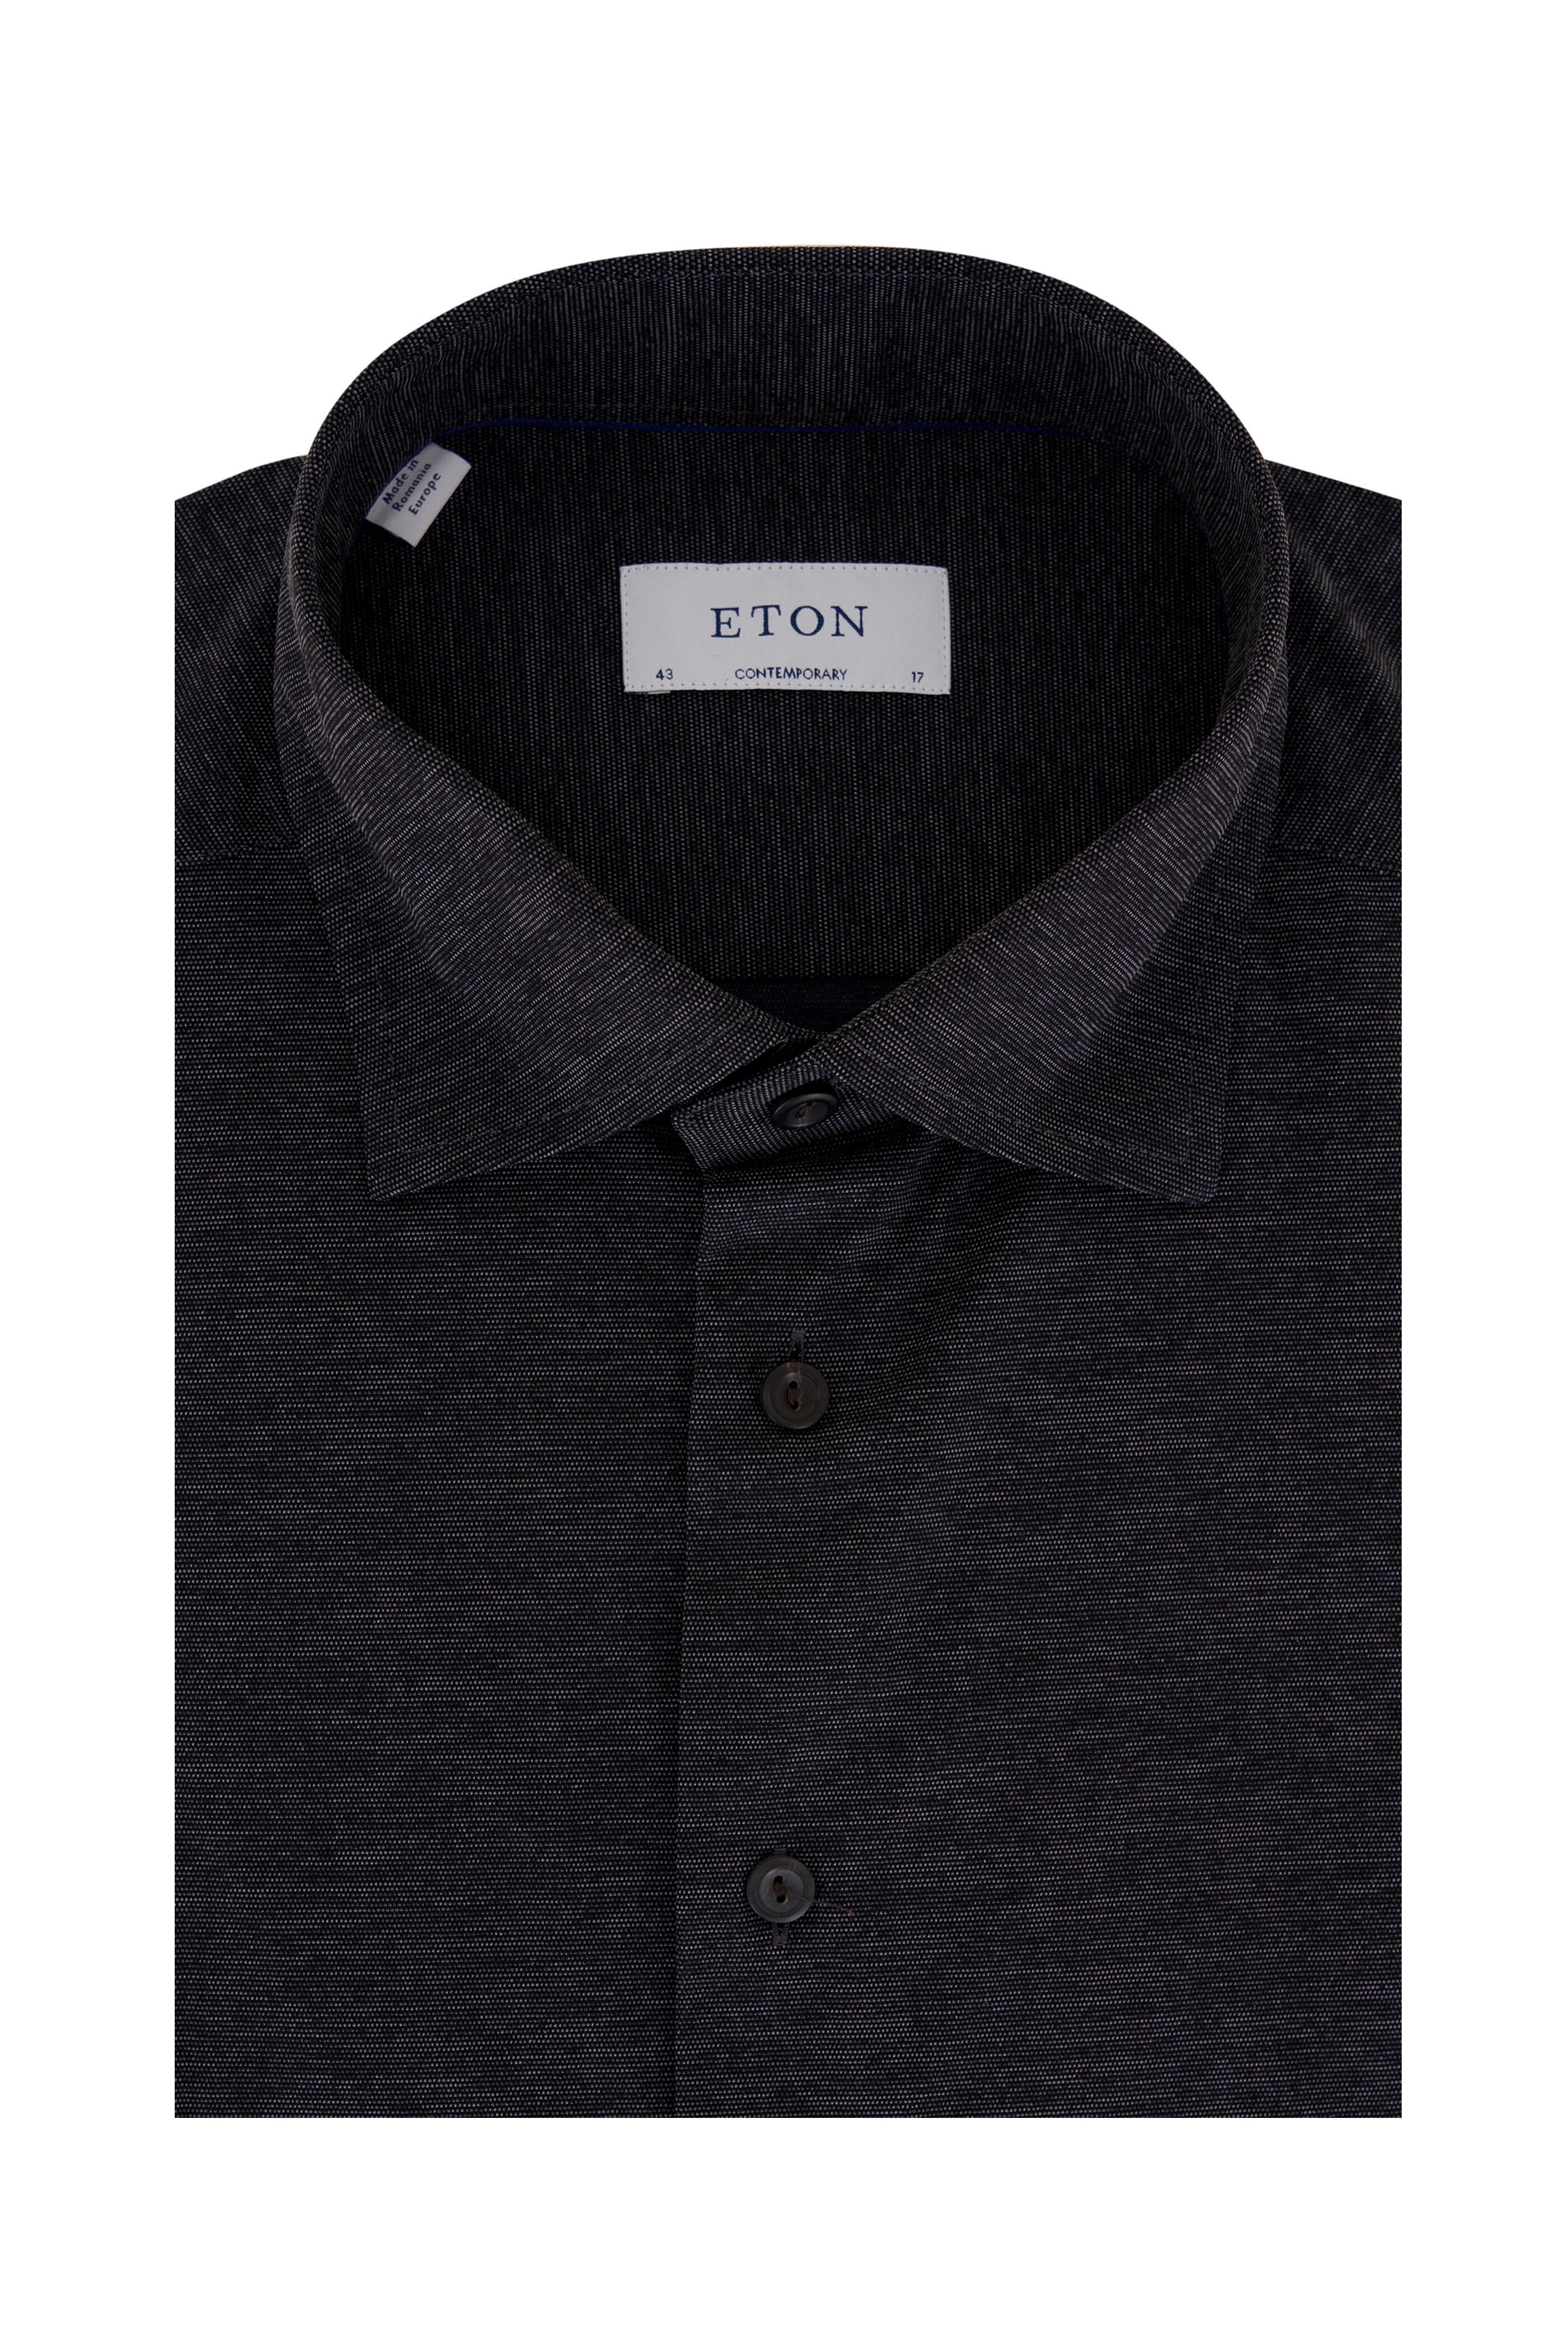 Eton - Charcoal Gray Mélange Stretch Dress Shirt